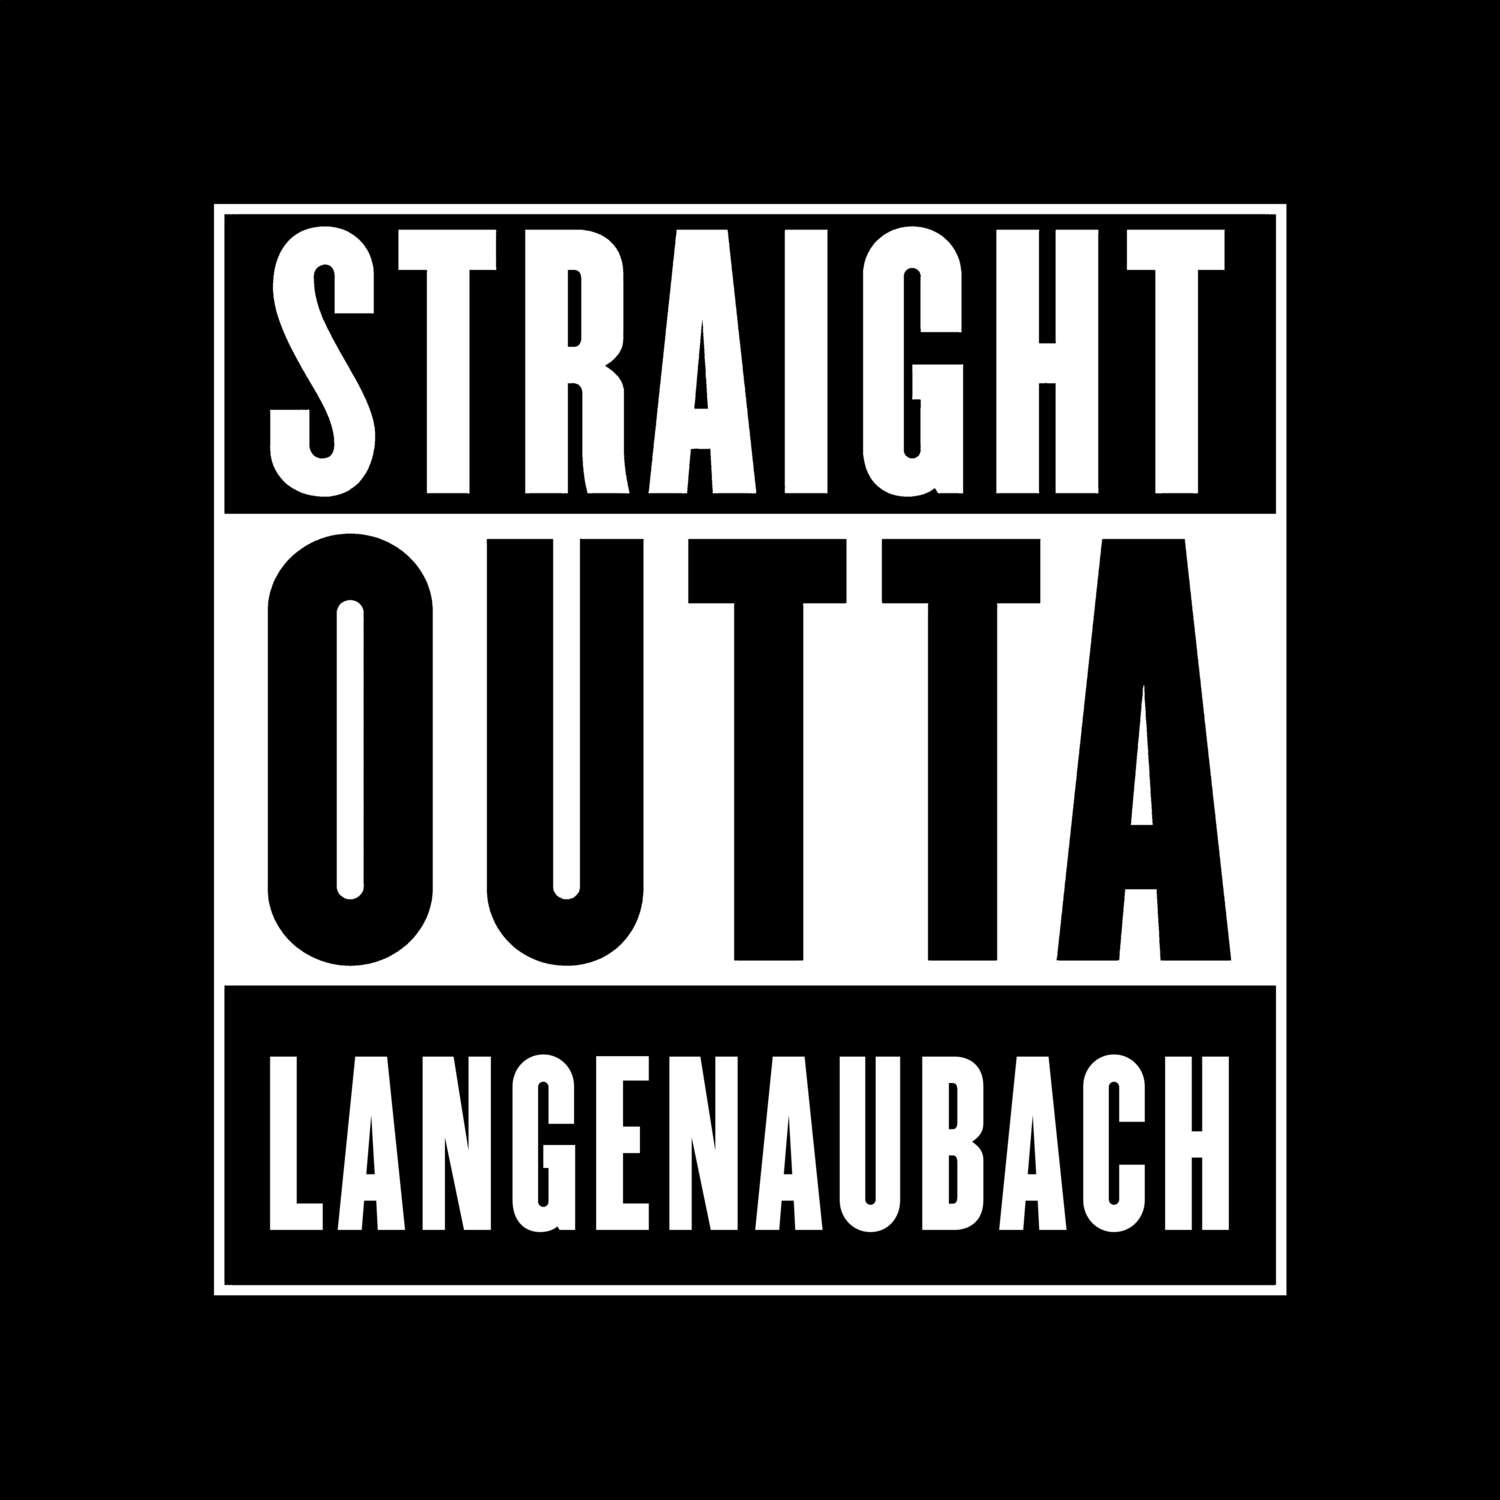 Langenaubach T-Shirt »Straight Outta«